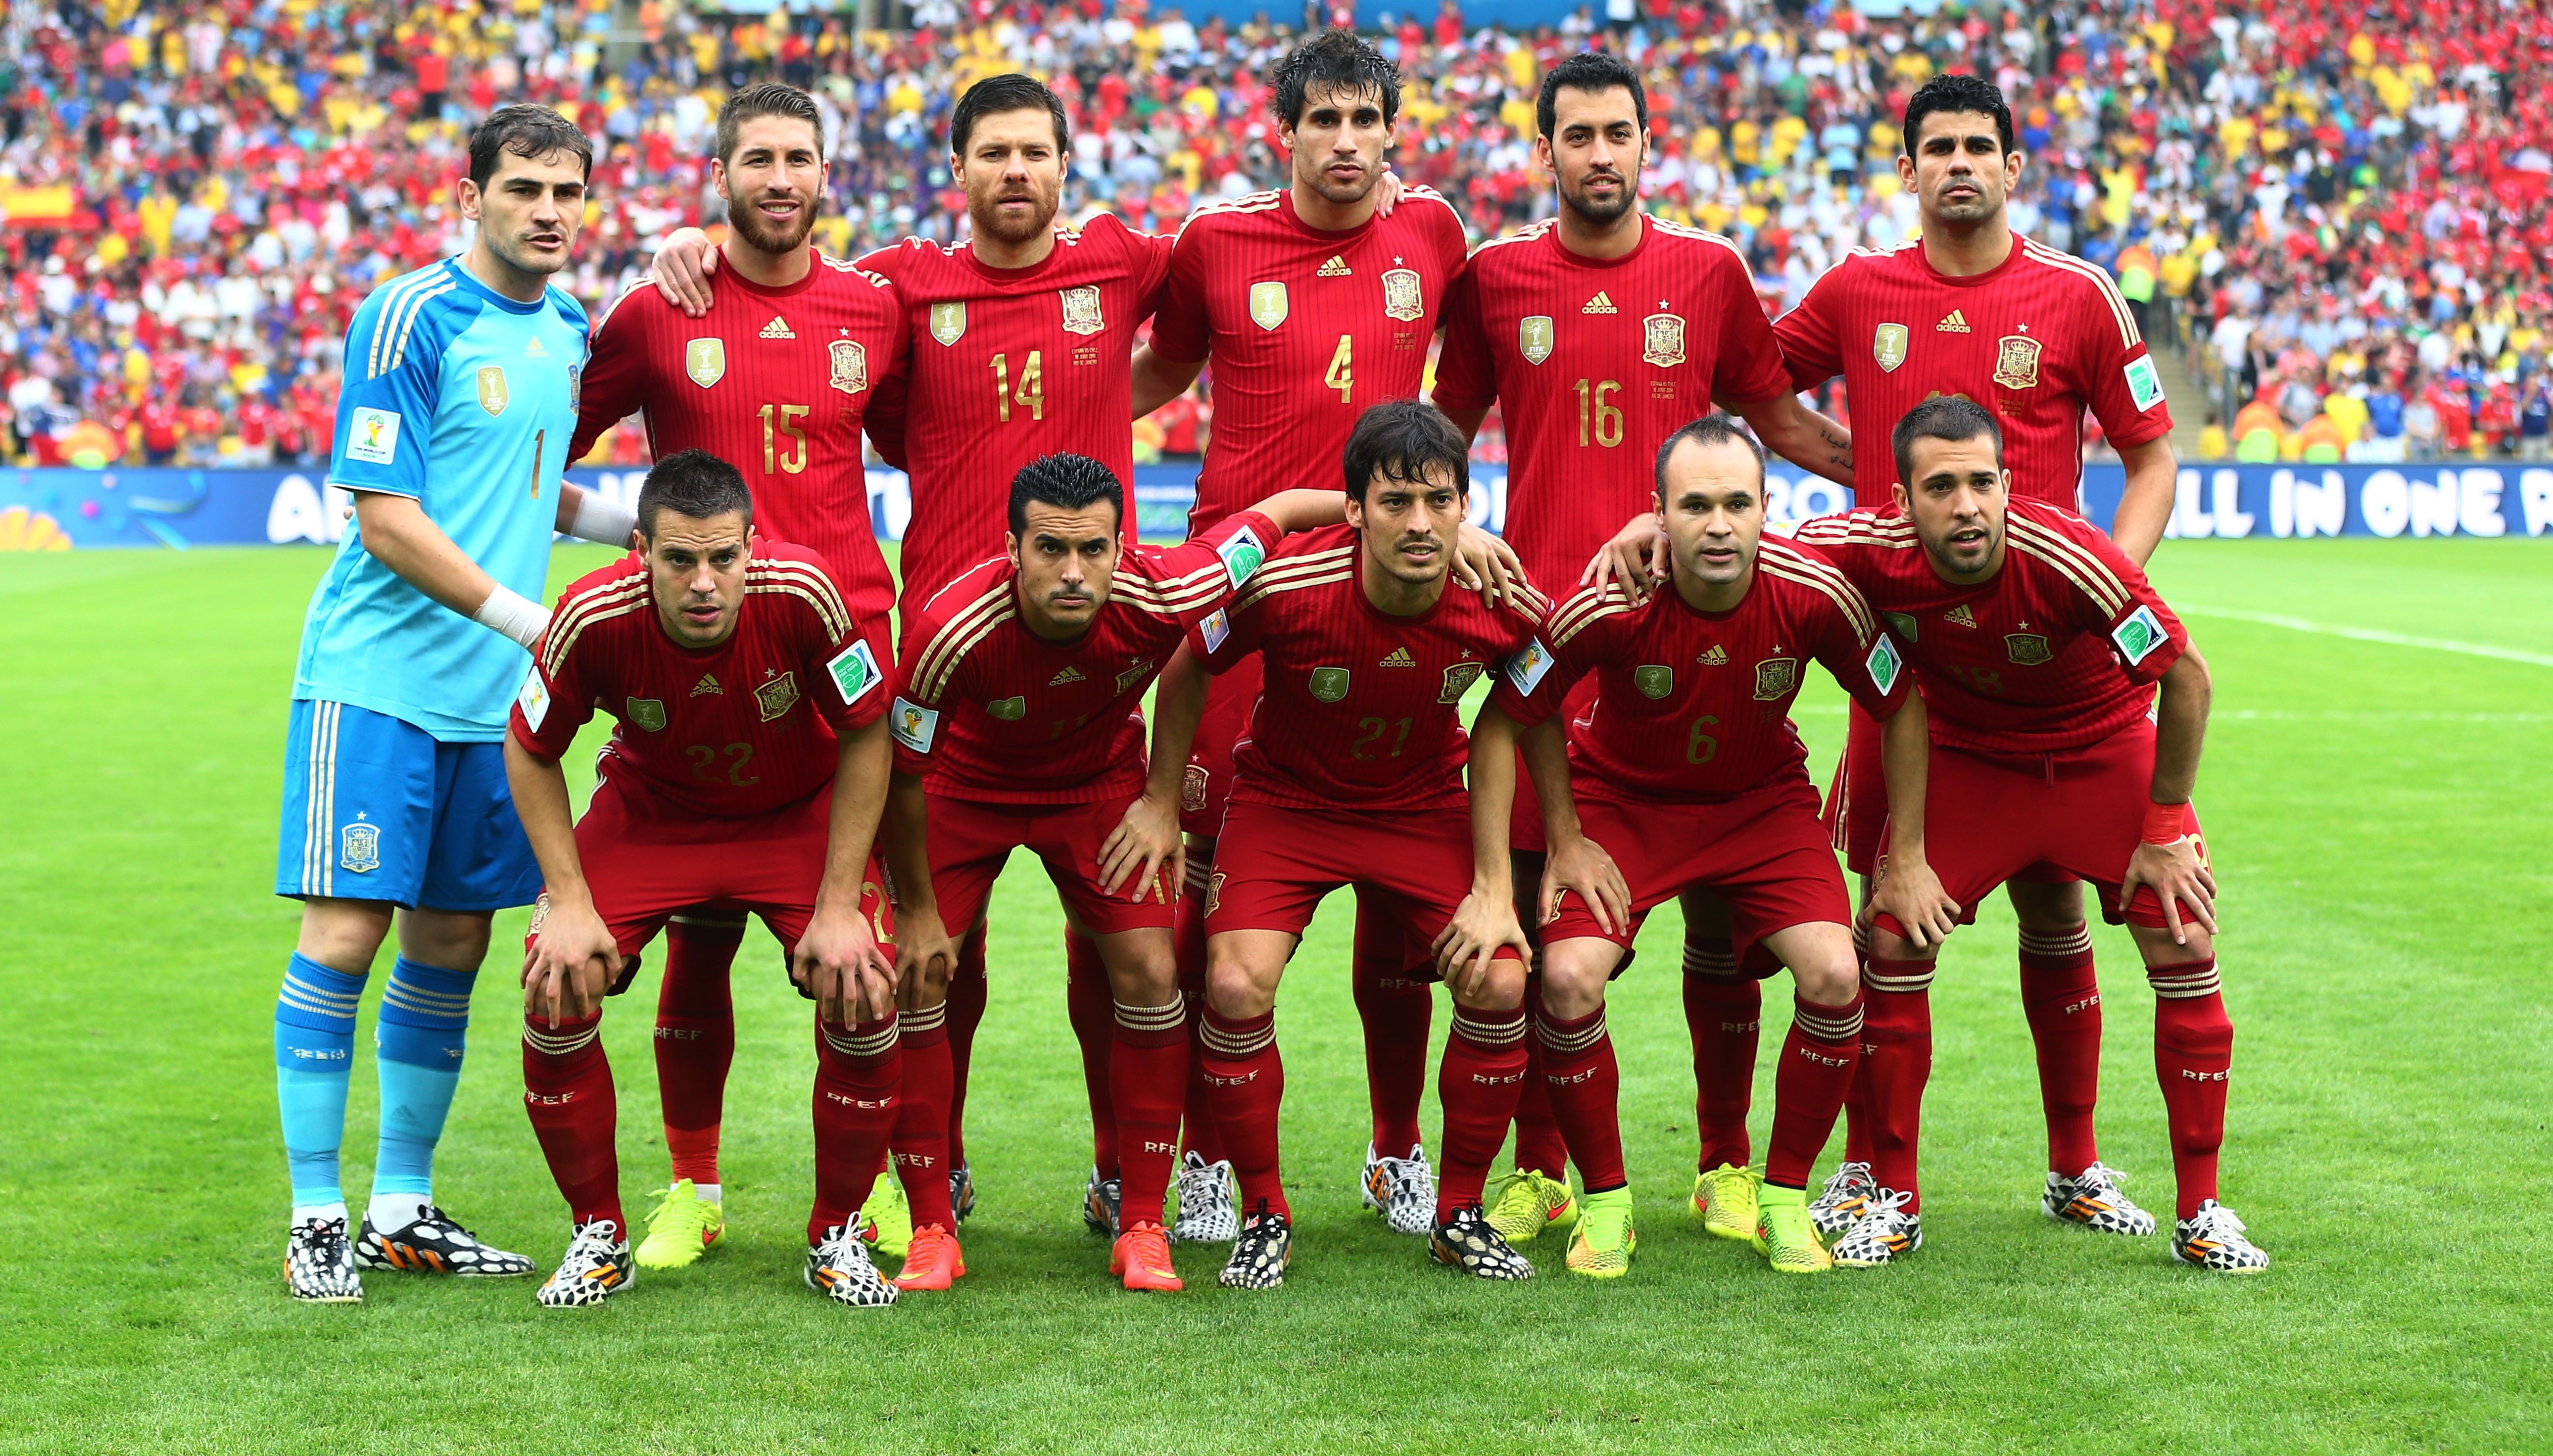 Испания какая команда футбола. Футбольная команда сборной Испании. Сборная Испании футболисты. Футбольная сборная Испании. Футболисты сборной Испании.